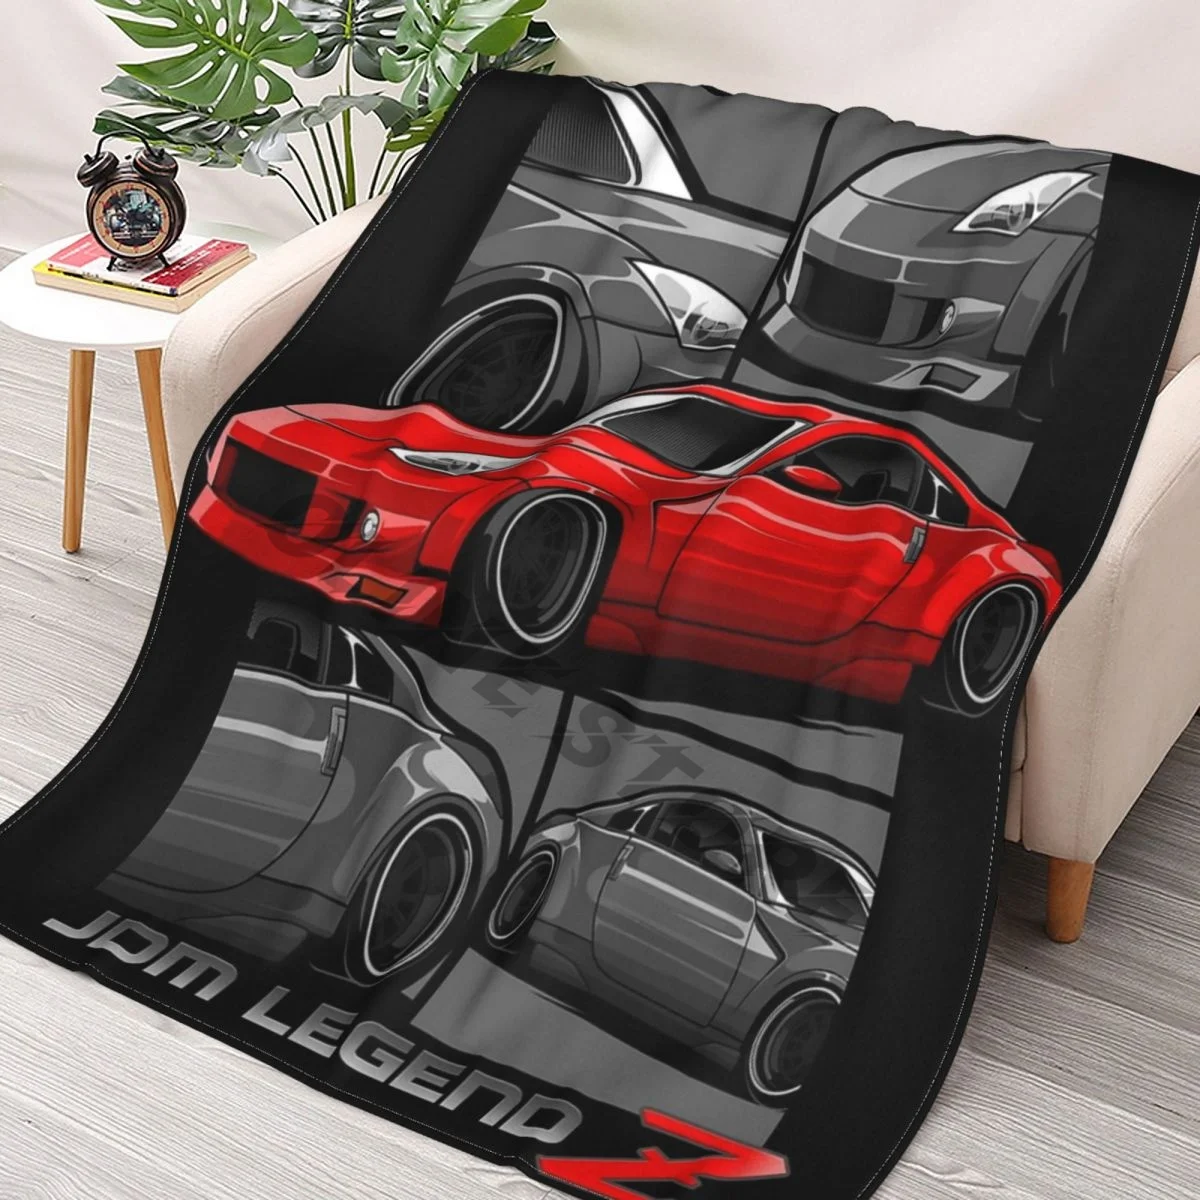 

Фланелевое ультрамягкое теплое одеяло для пикника 350Z, Fairlady Z, Z33, JDM Legend Z